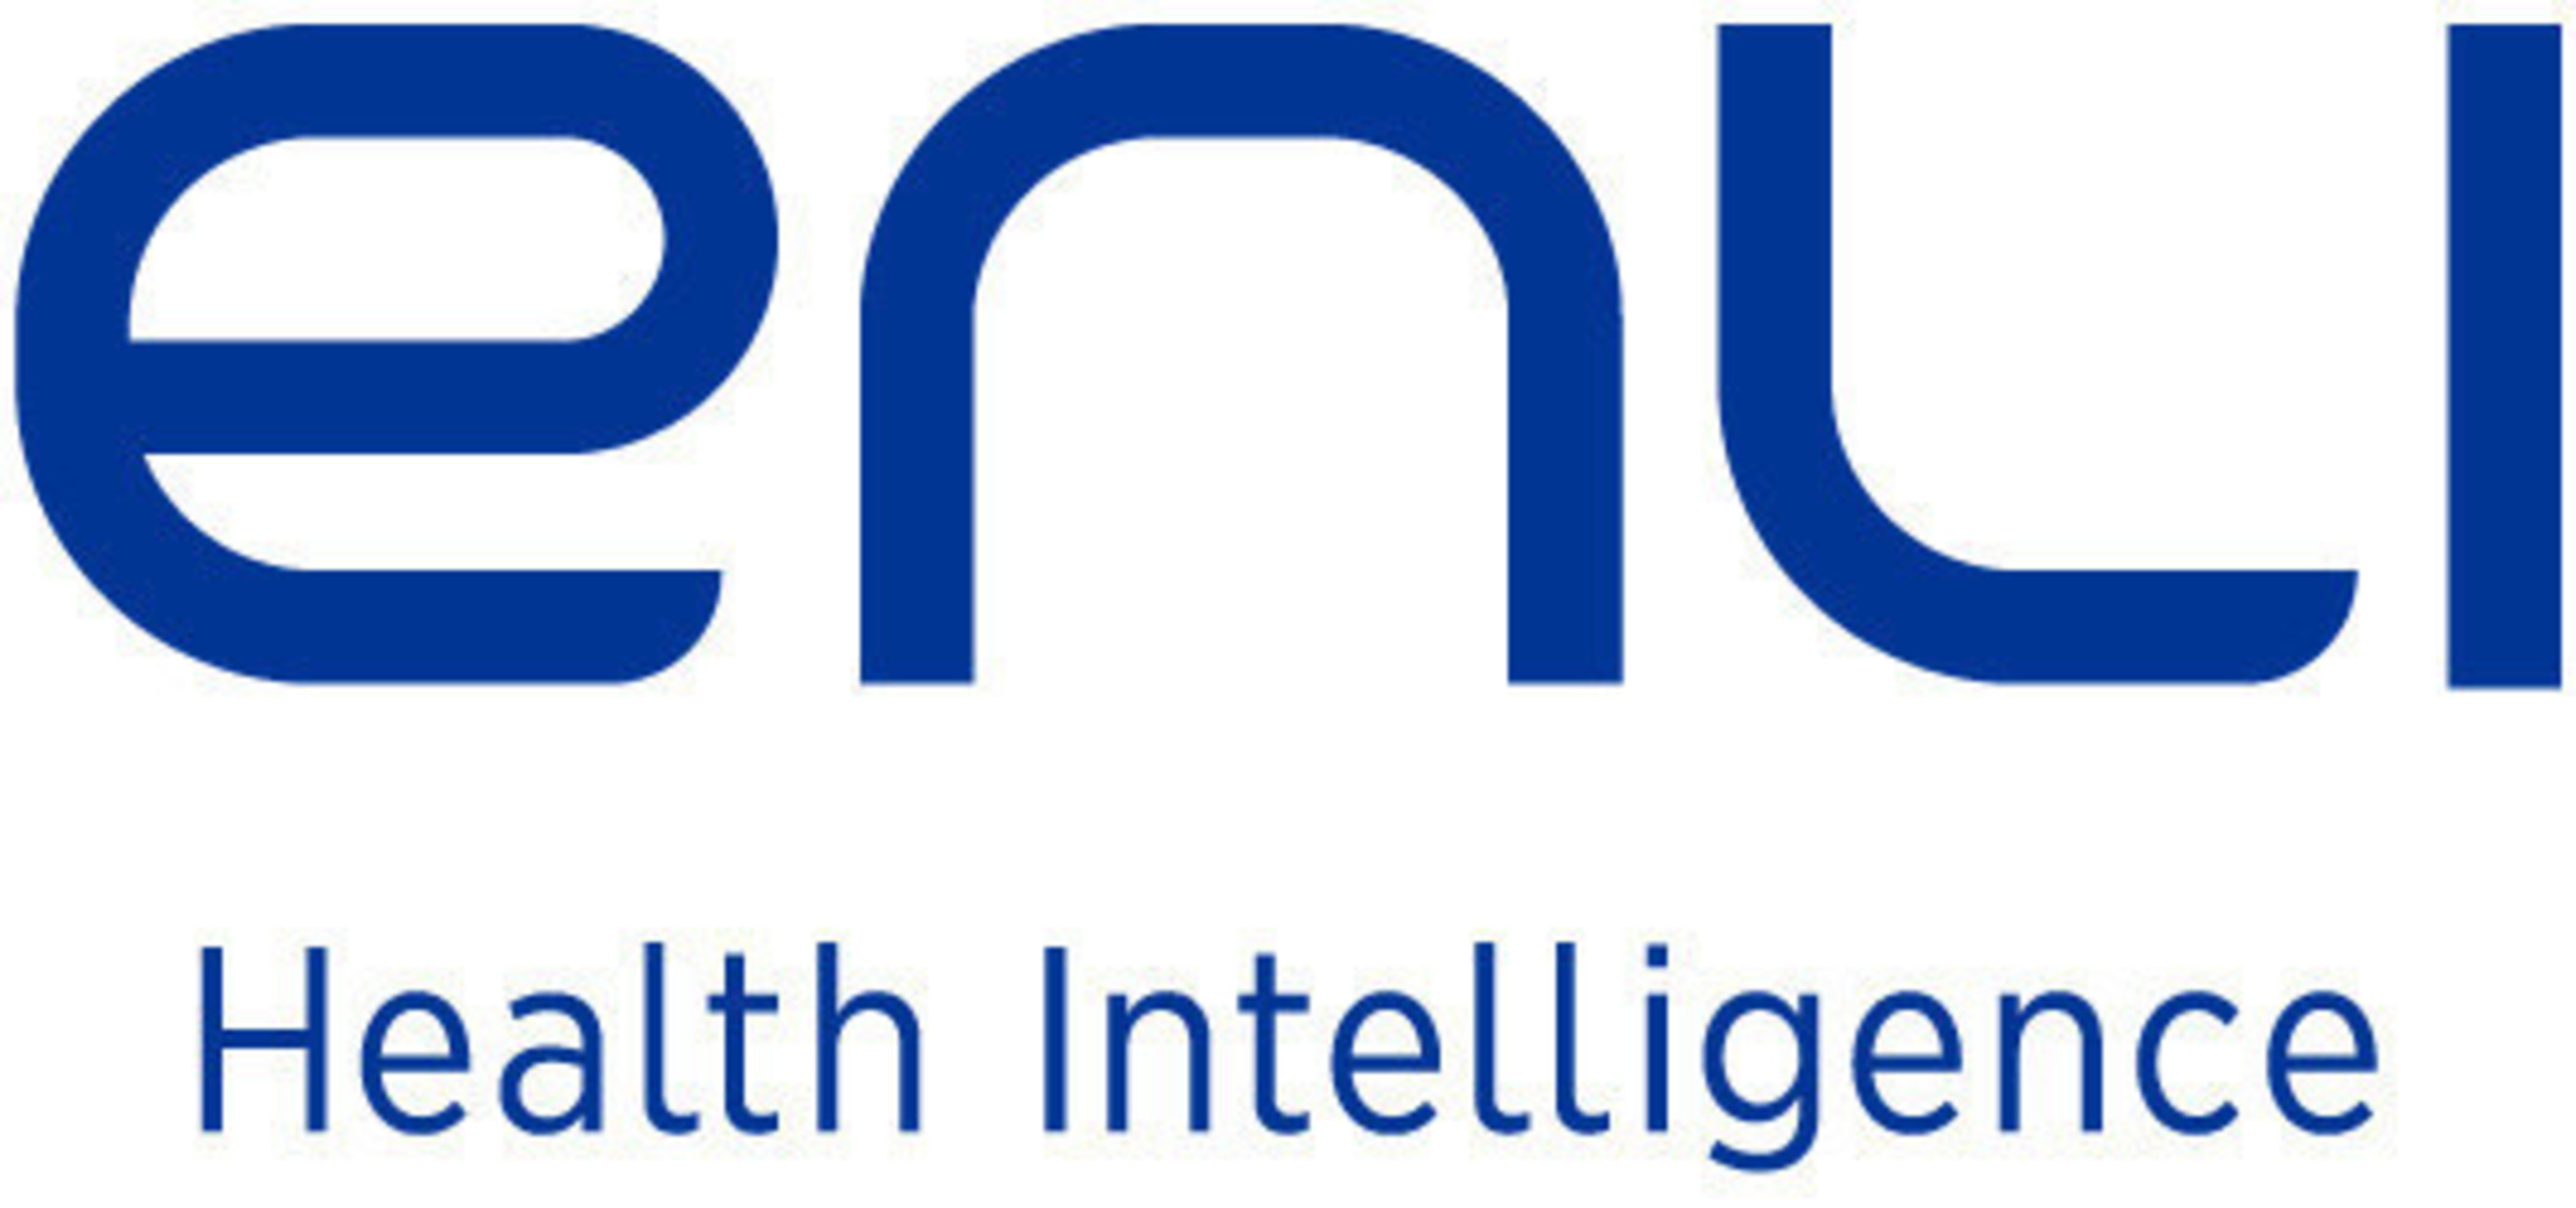 Enli logo